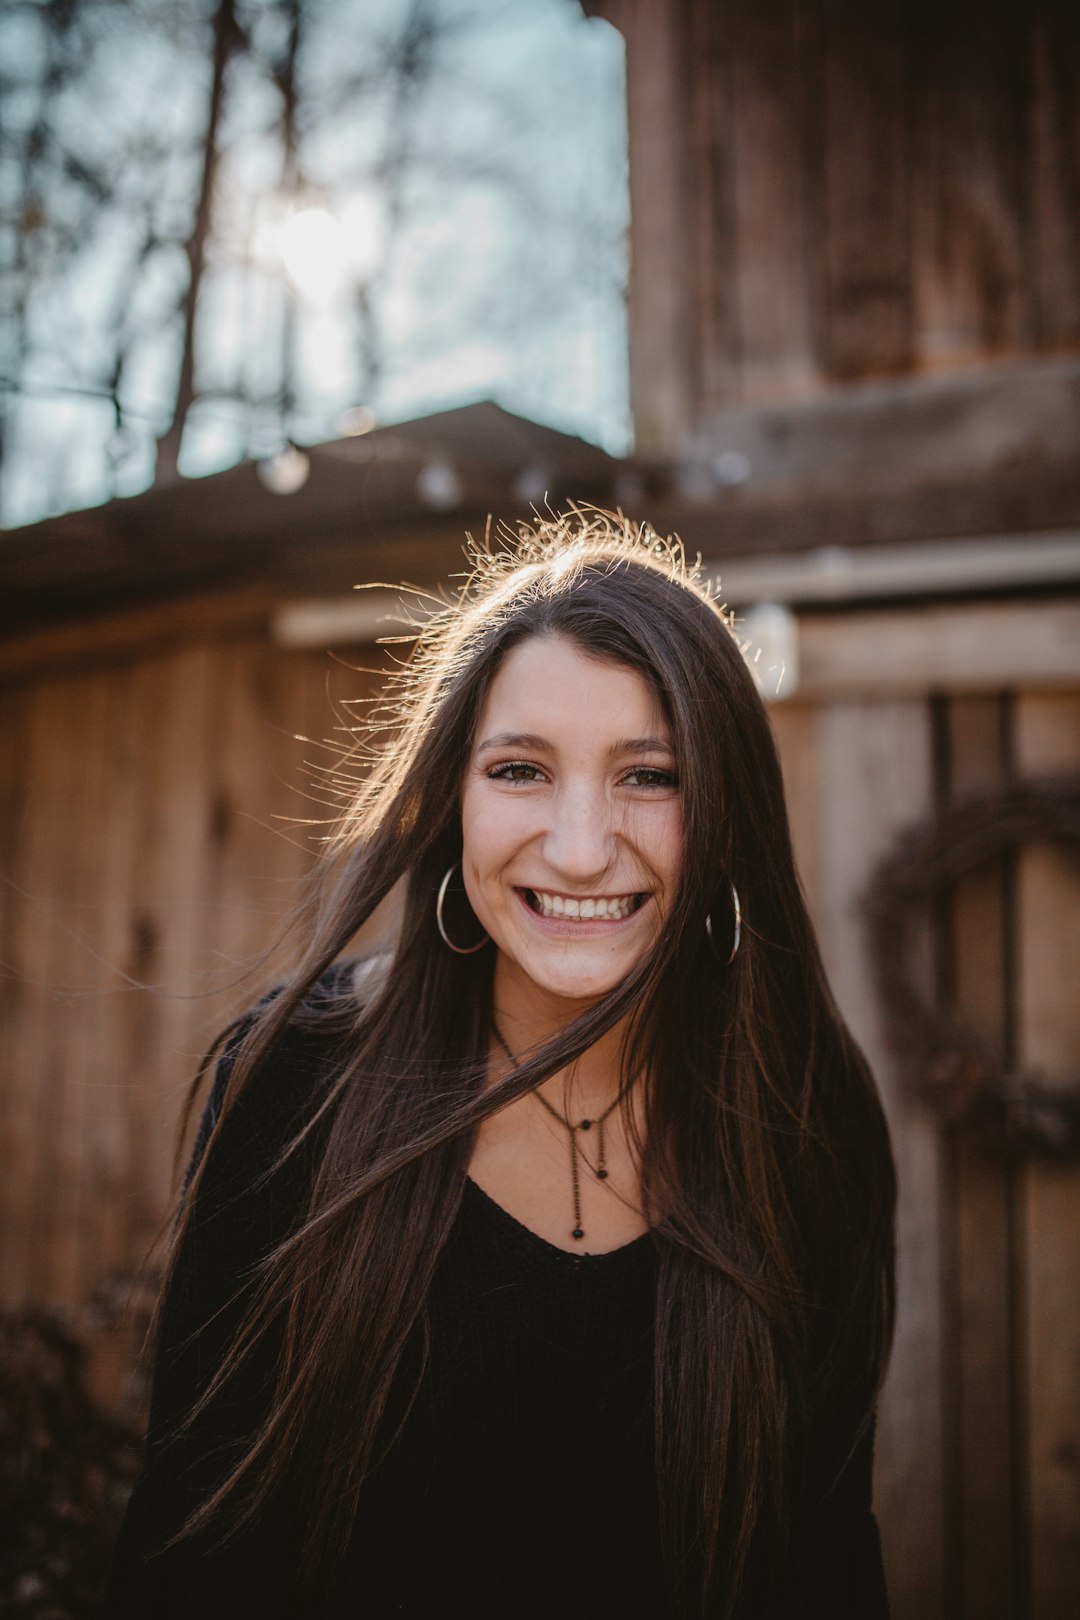 woman wearing black shirt smiling photography